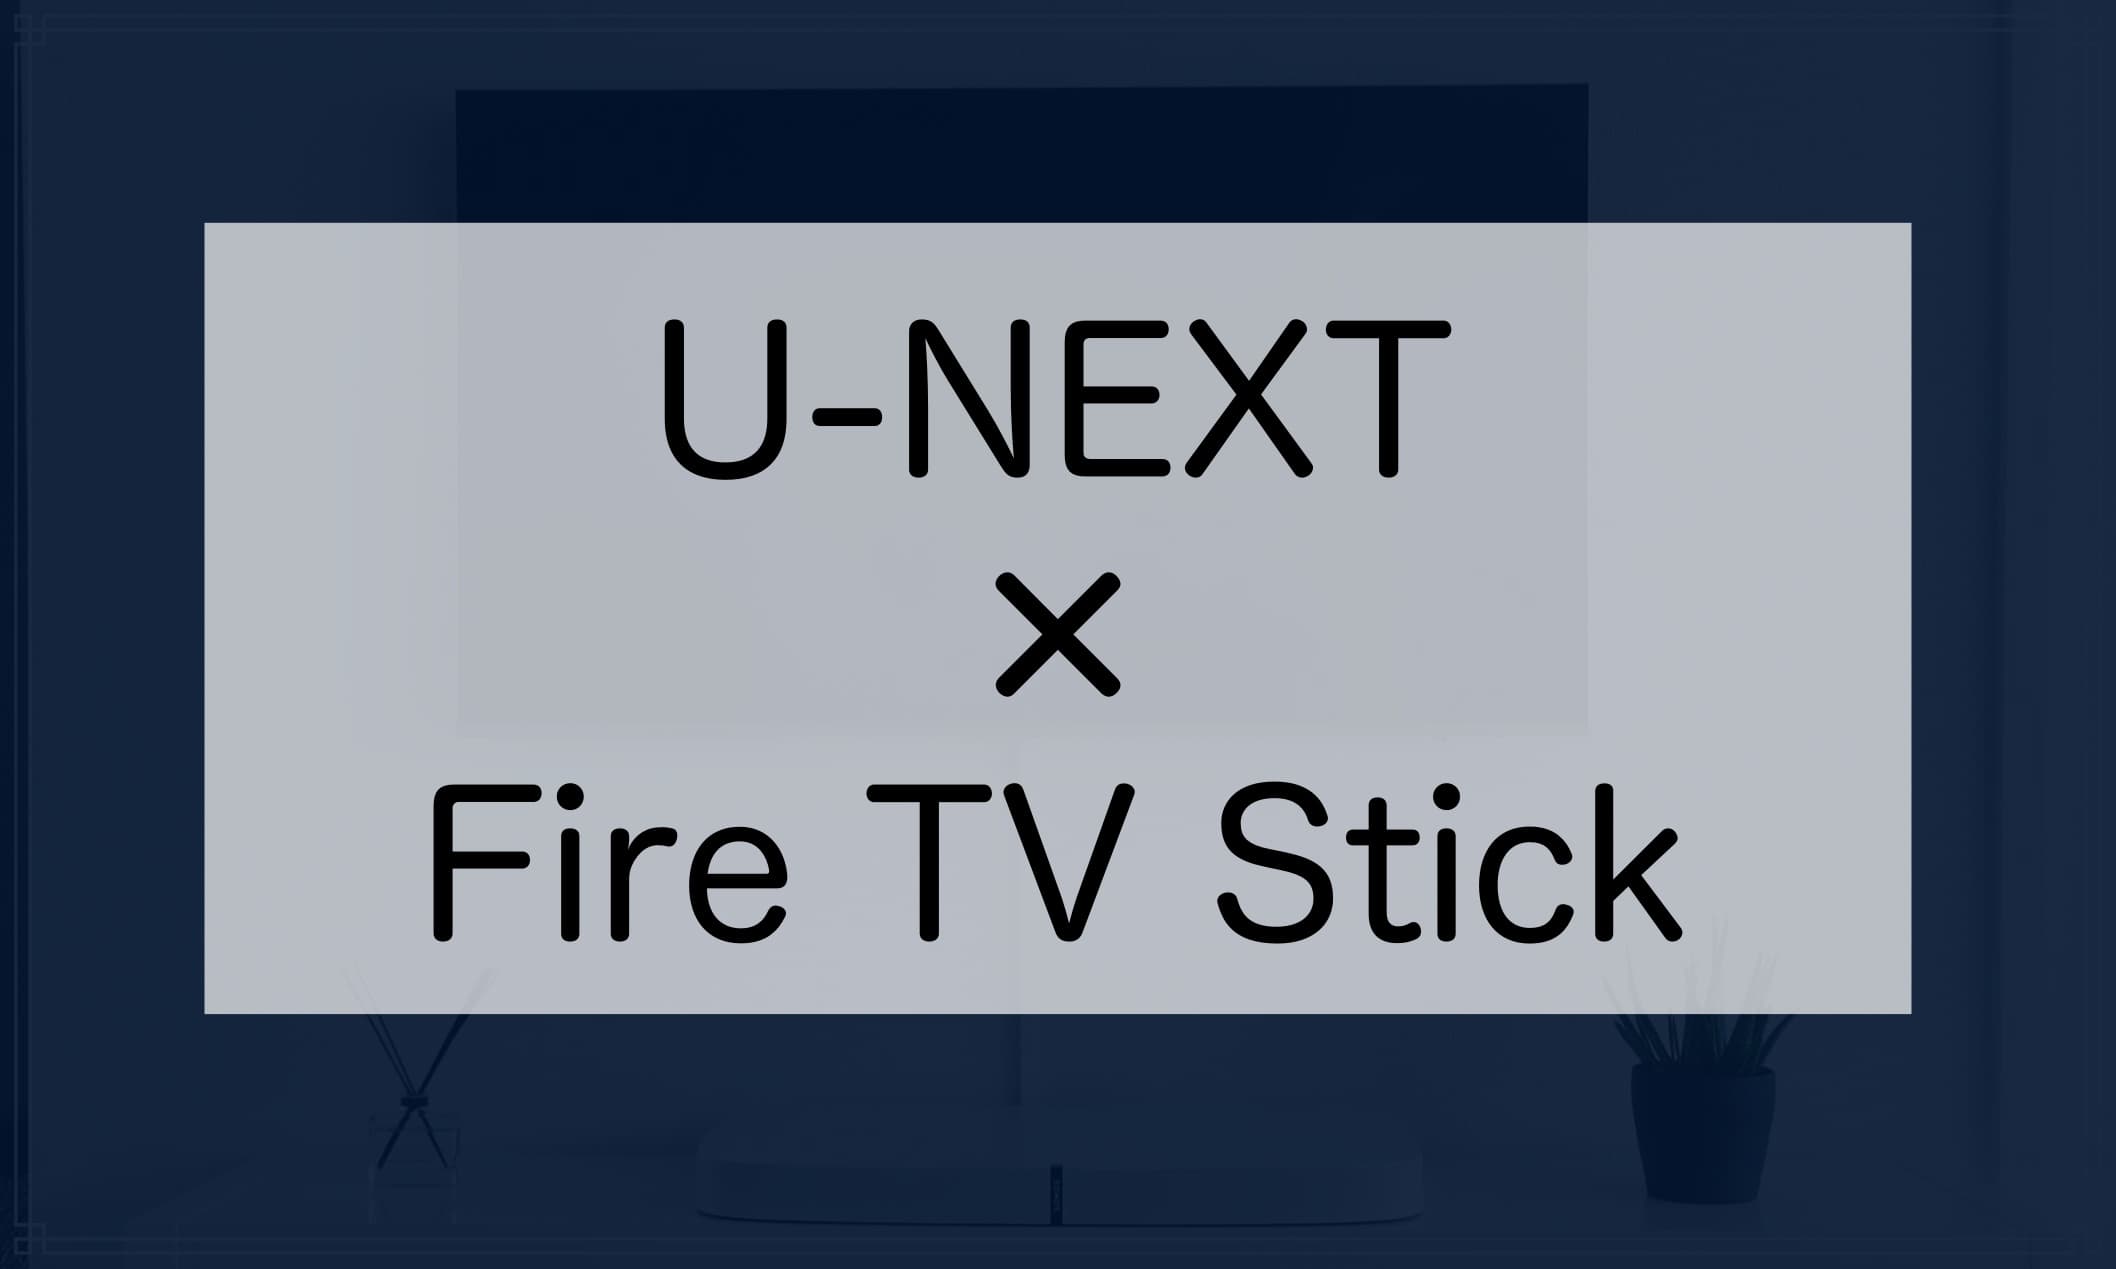 FireTVStickを利用してU-NEXTを視聴する方法